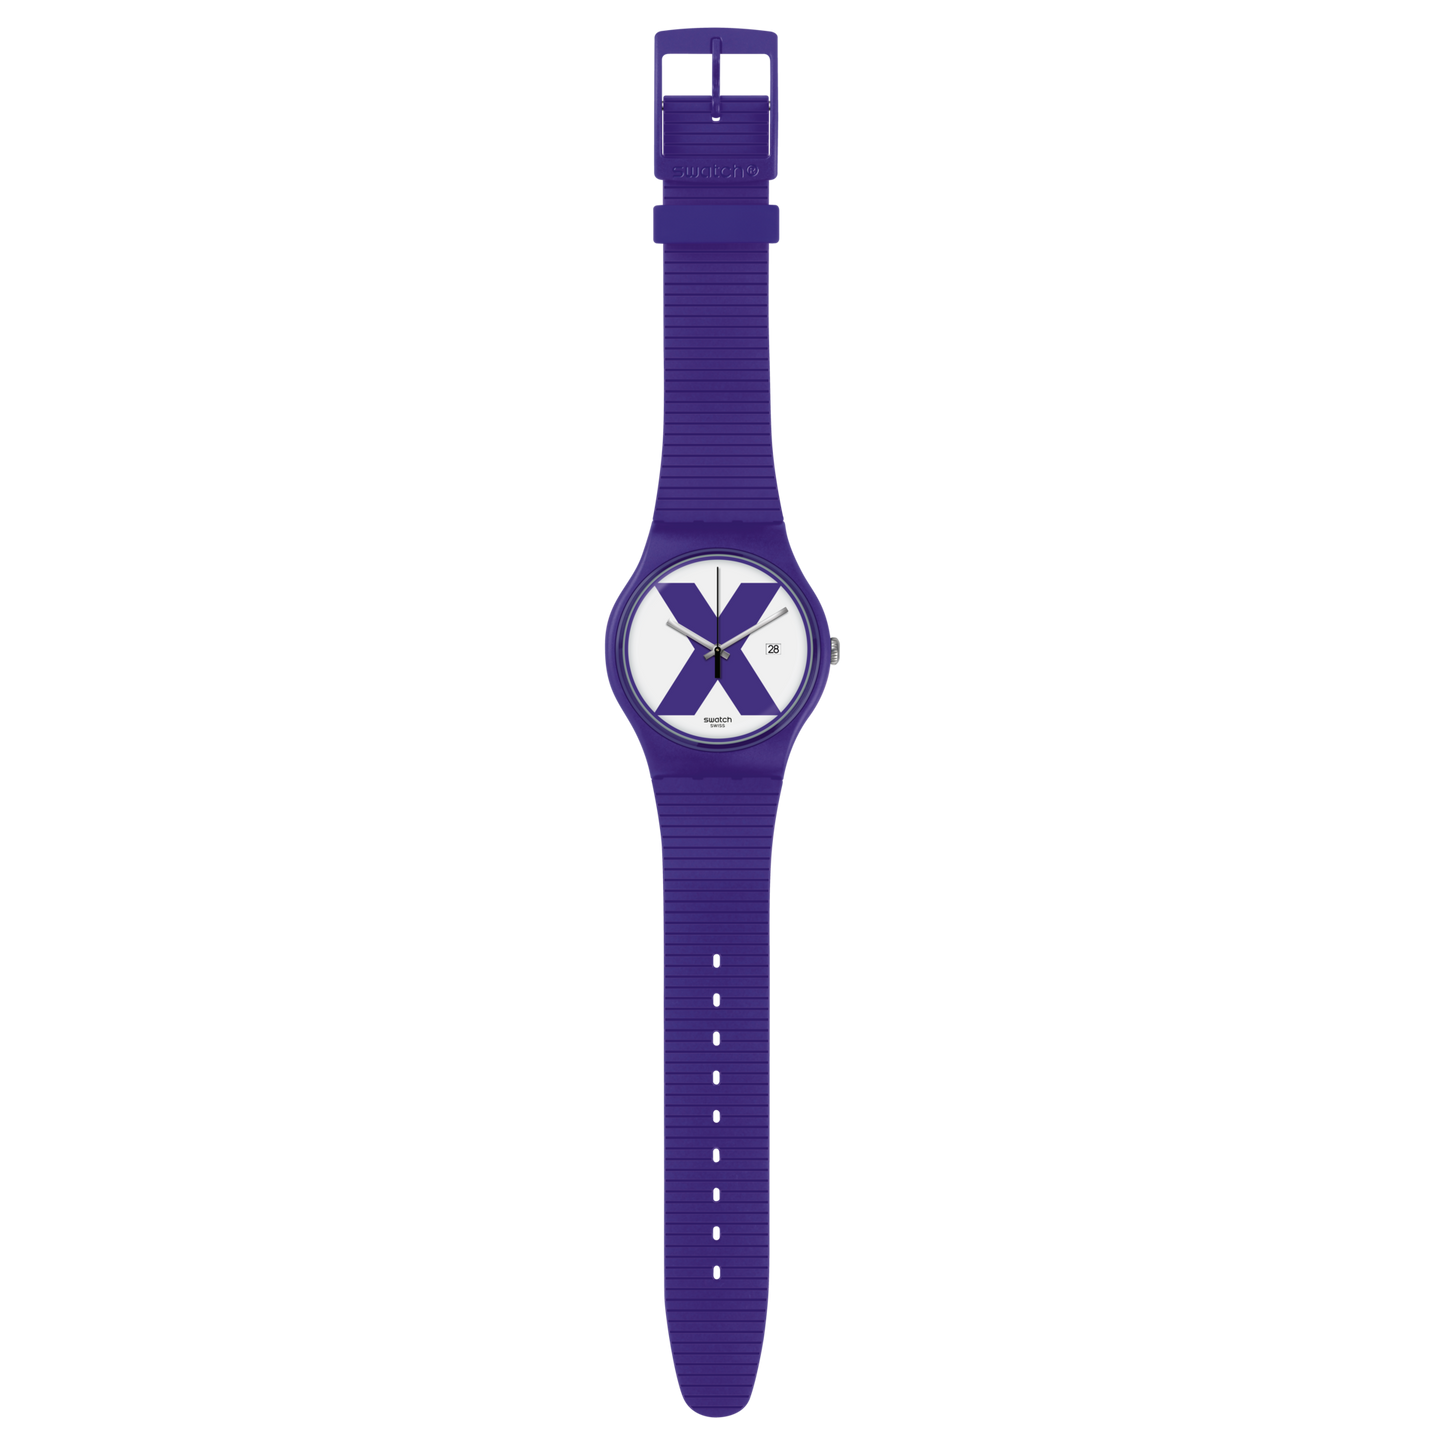 Swatch "XX-Rated" Watch (PURPLE)